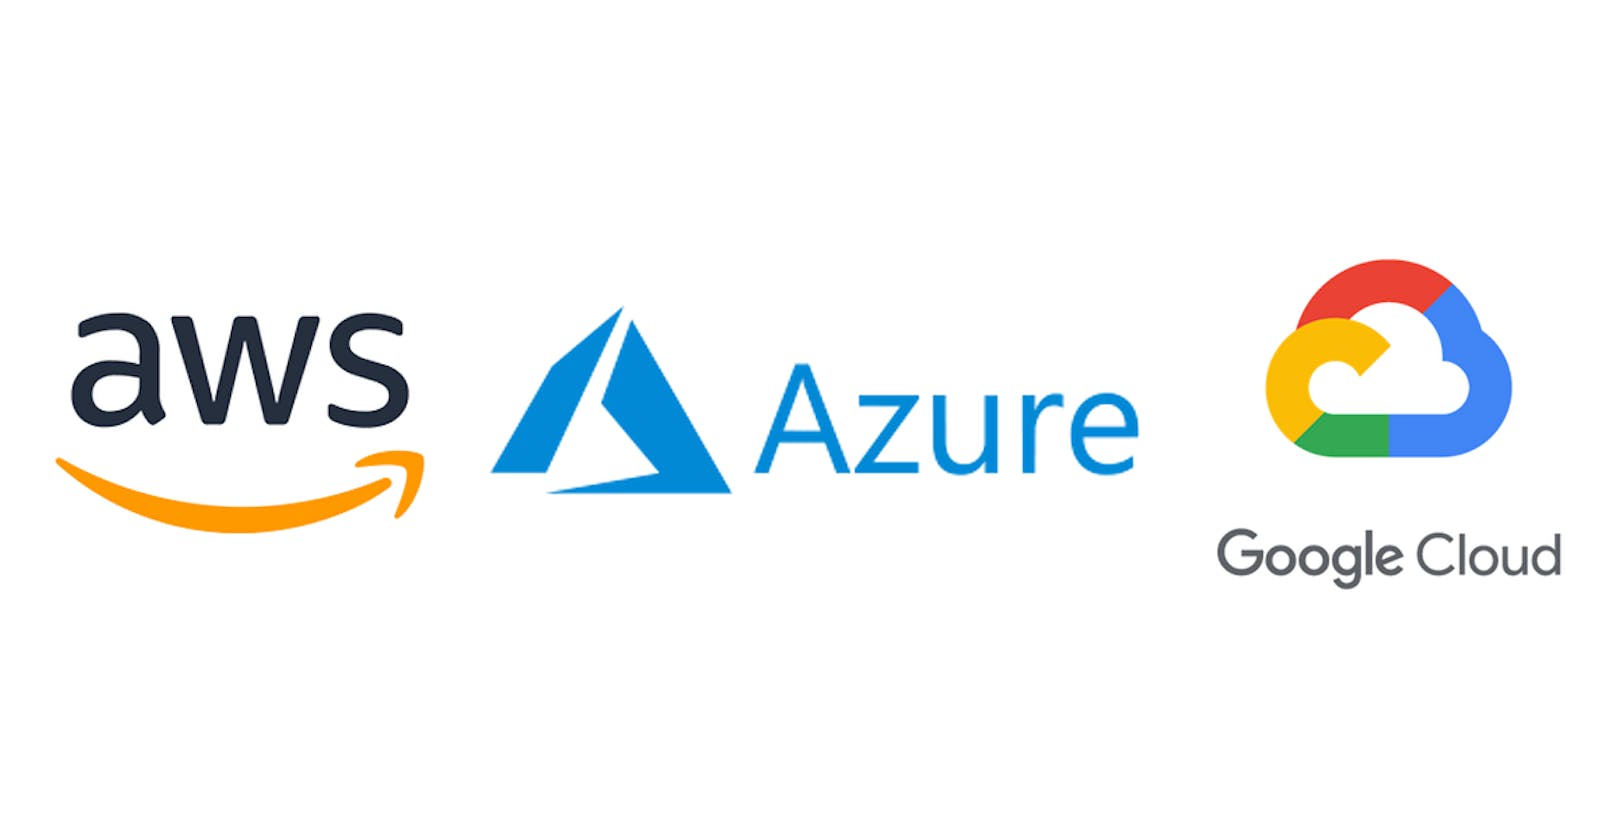 Cloud services across Azure, AWS and GCP